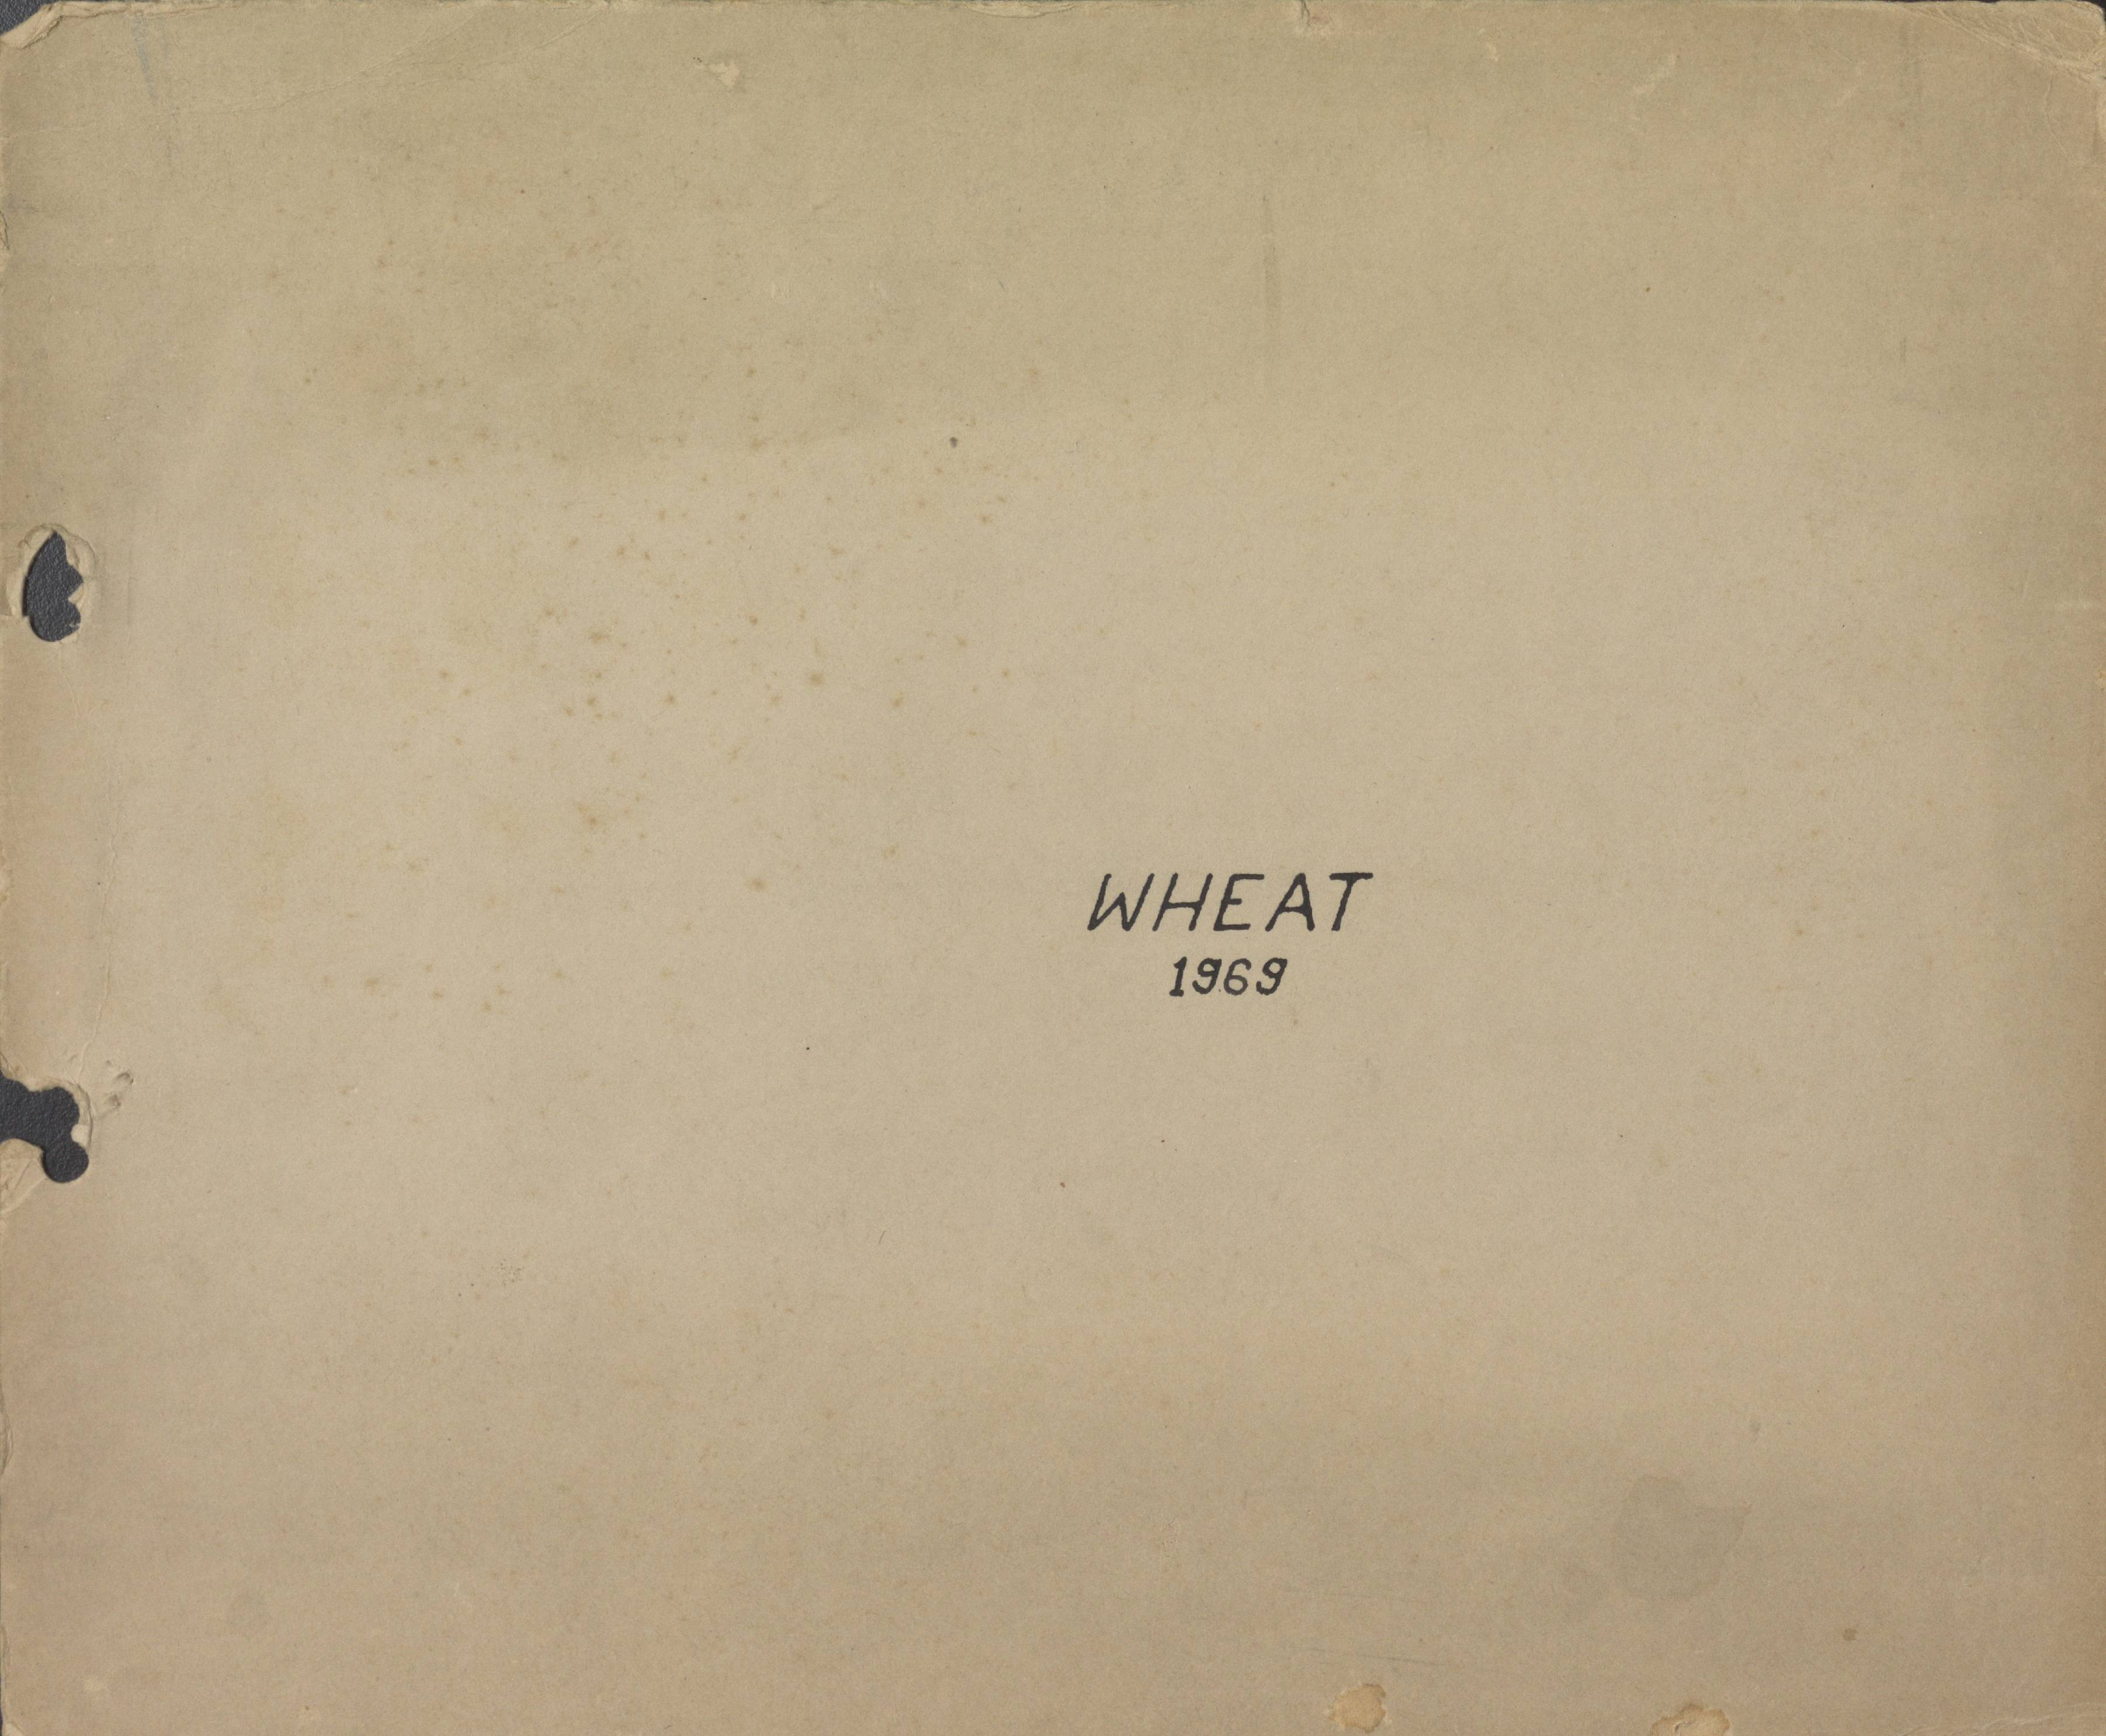 Photographs of Wheat Varieties